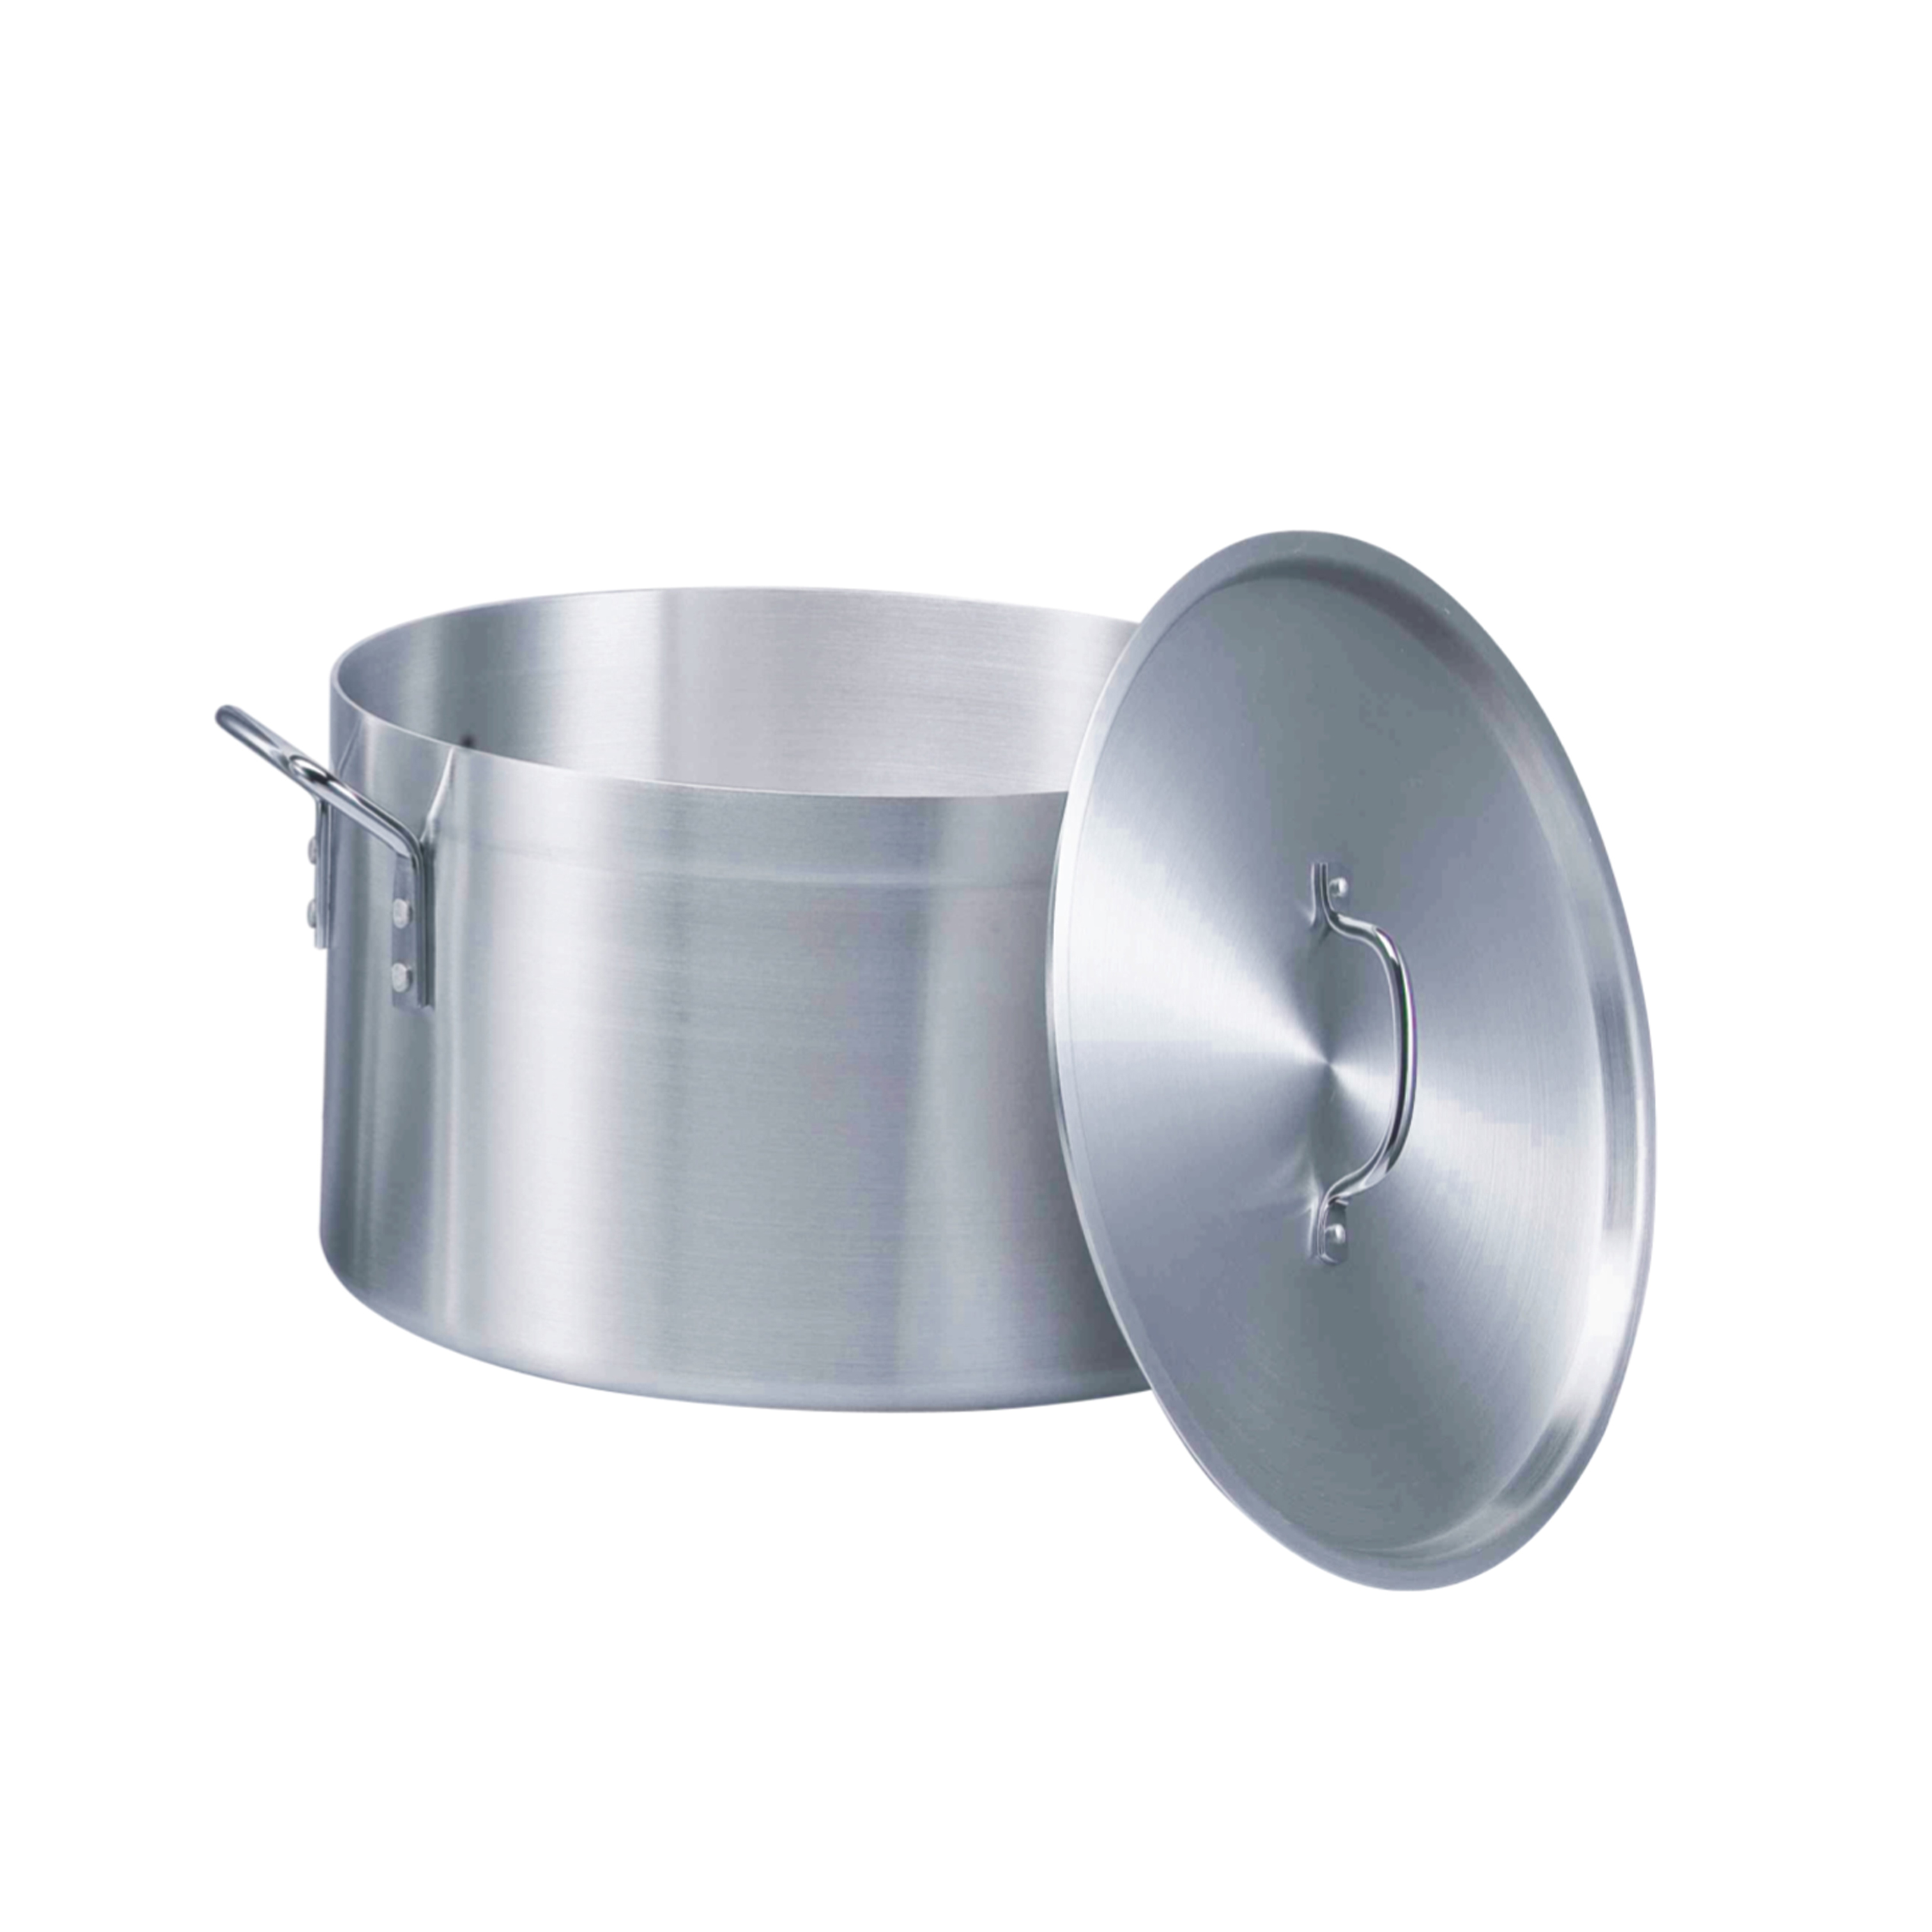 3PCS Aluminium Stock Pot with Heavy Gauge for Home